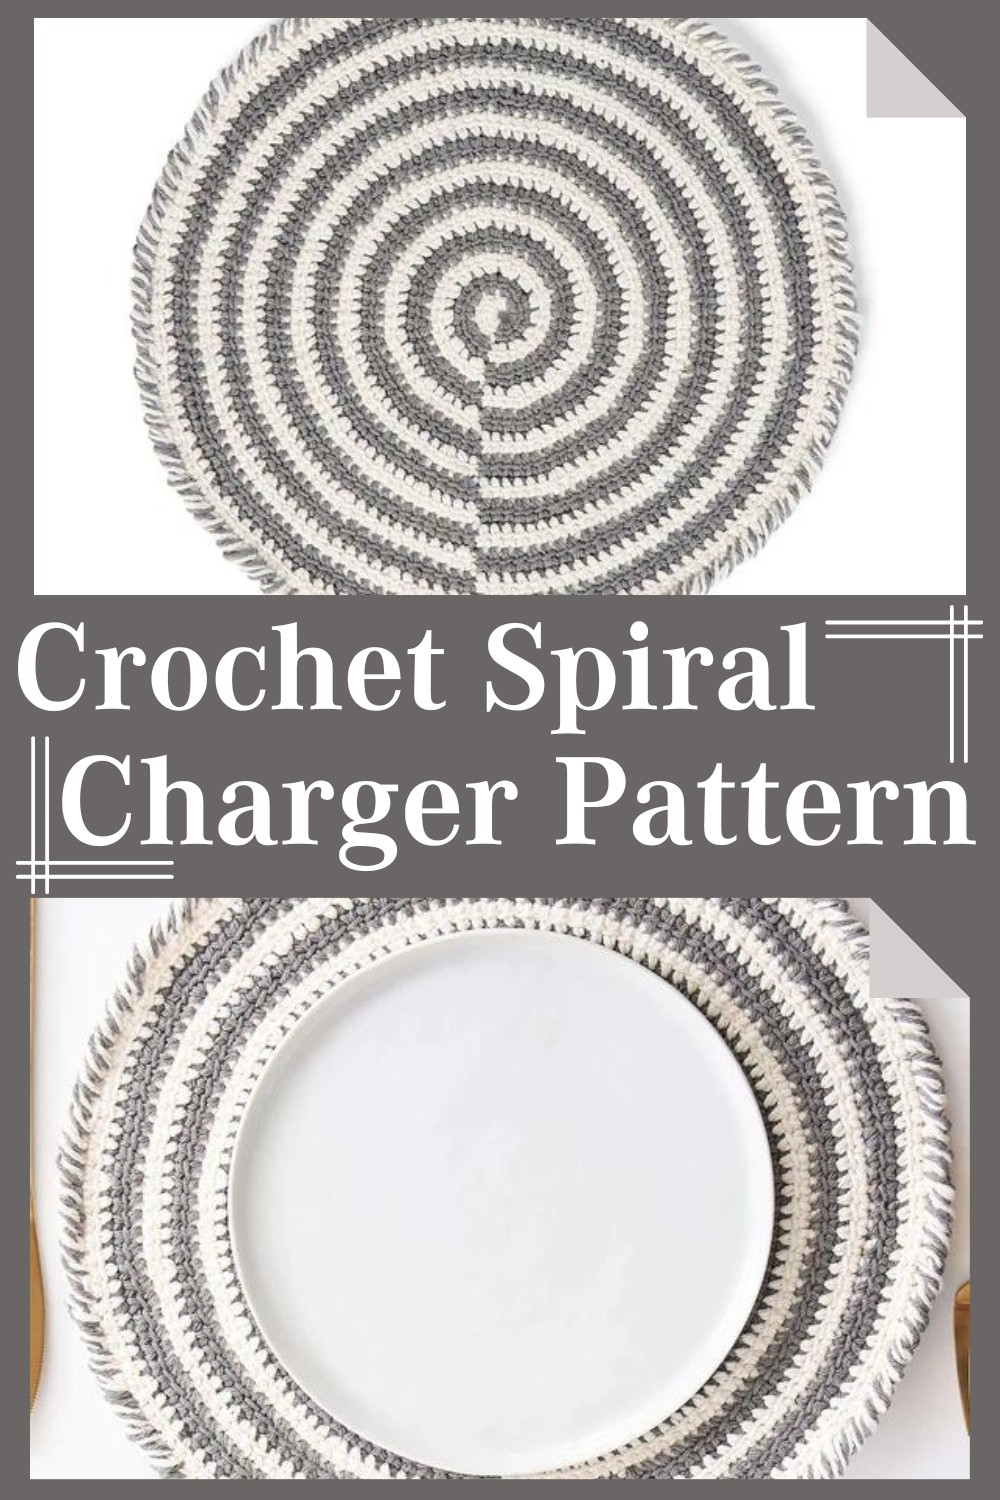 Crochet Spiral Charger Pattern